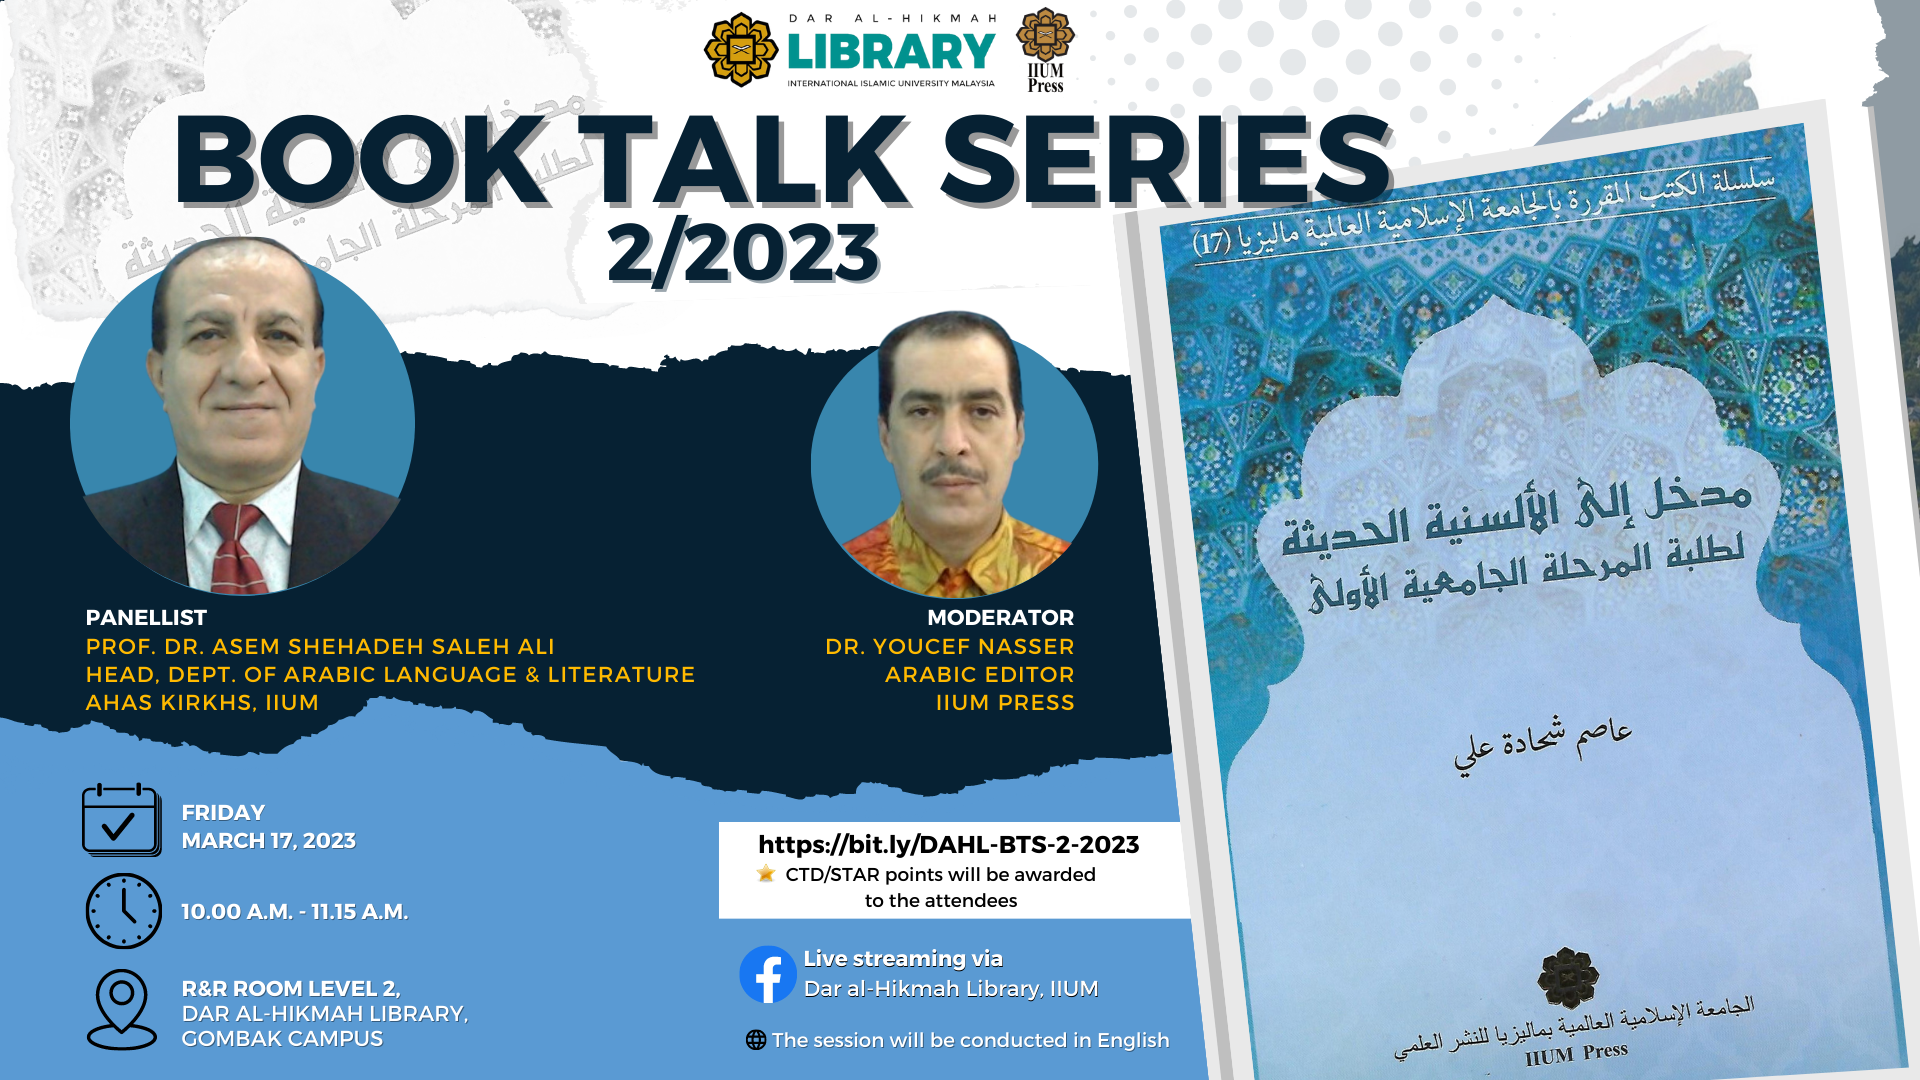 DAR AL-HIKMAH LIBRARY BOOK TALK SERIES 2/2023